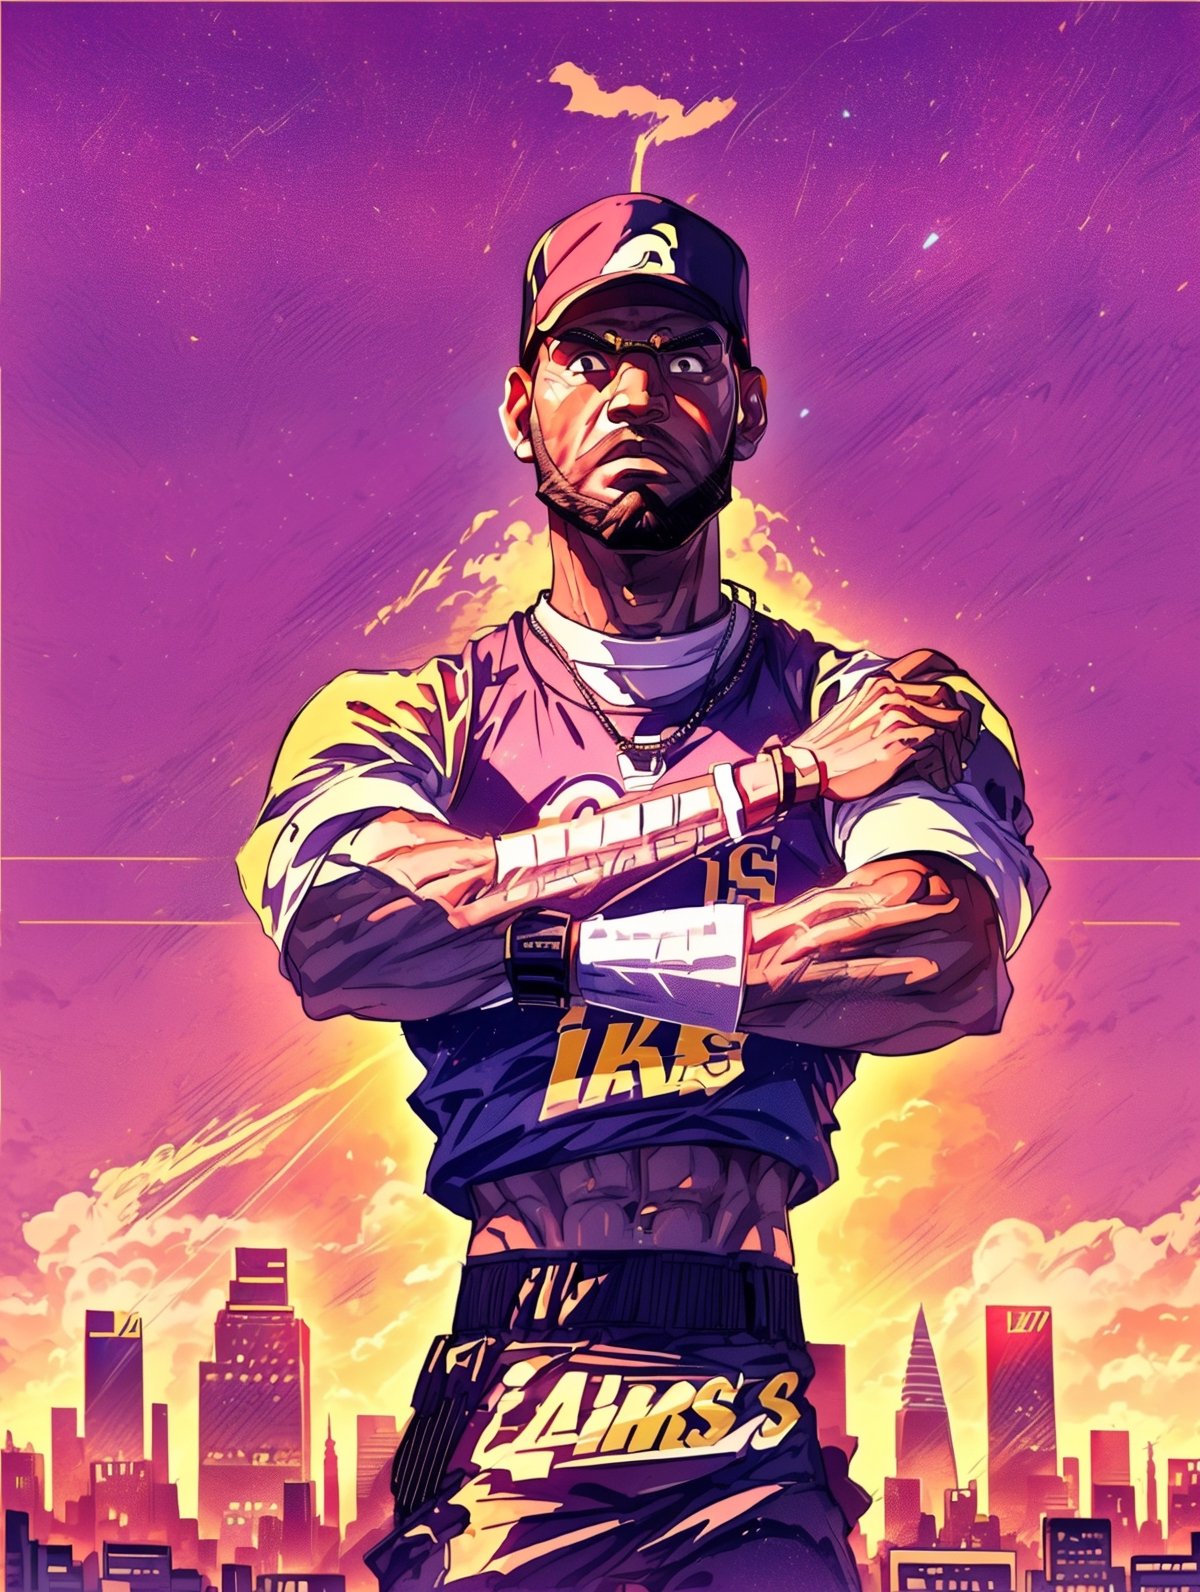 4K,  (GTA style),  (1boy, LeBron James), wearing Lakers suit, 1990s retro style, (Los Angles city skyline background), sunset),  masterpiece,  centered,  sharp focus , Glasses, EpicSky